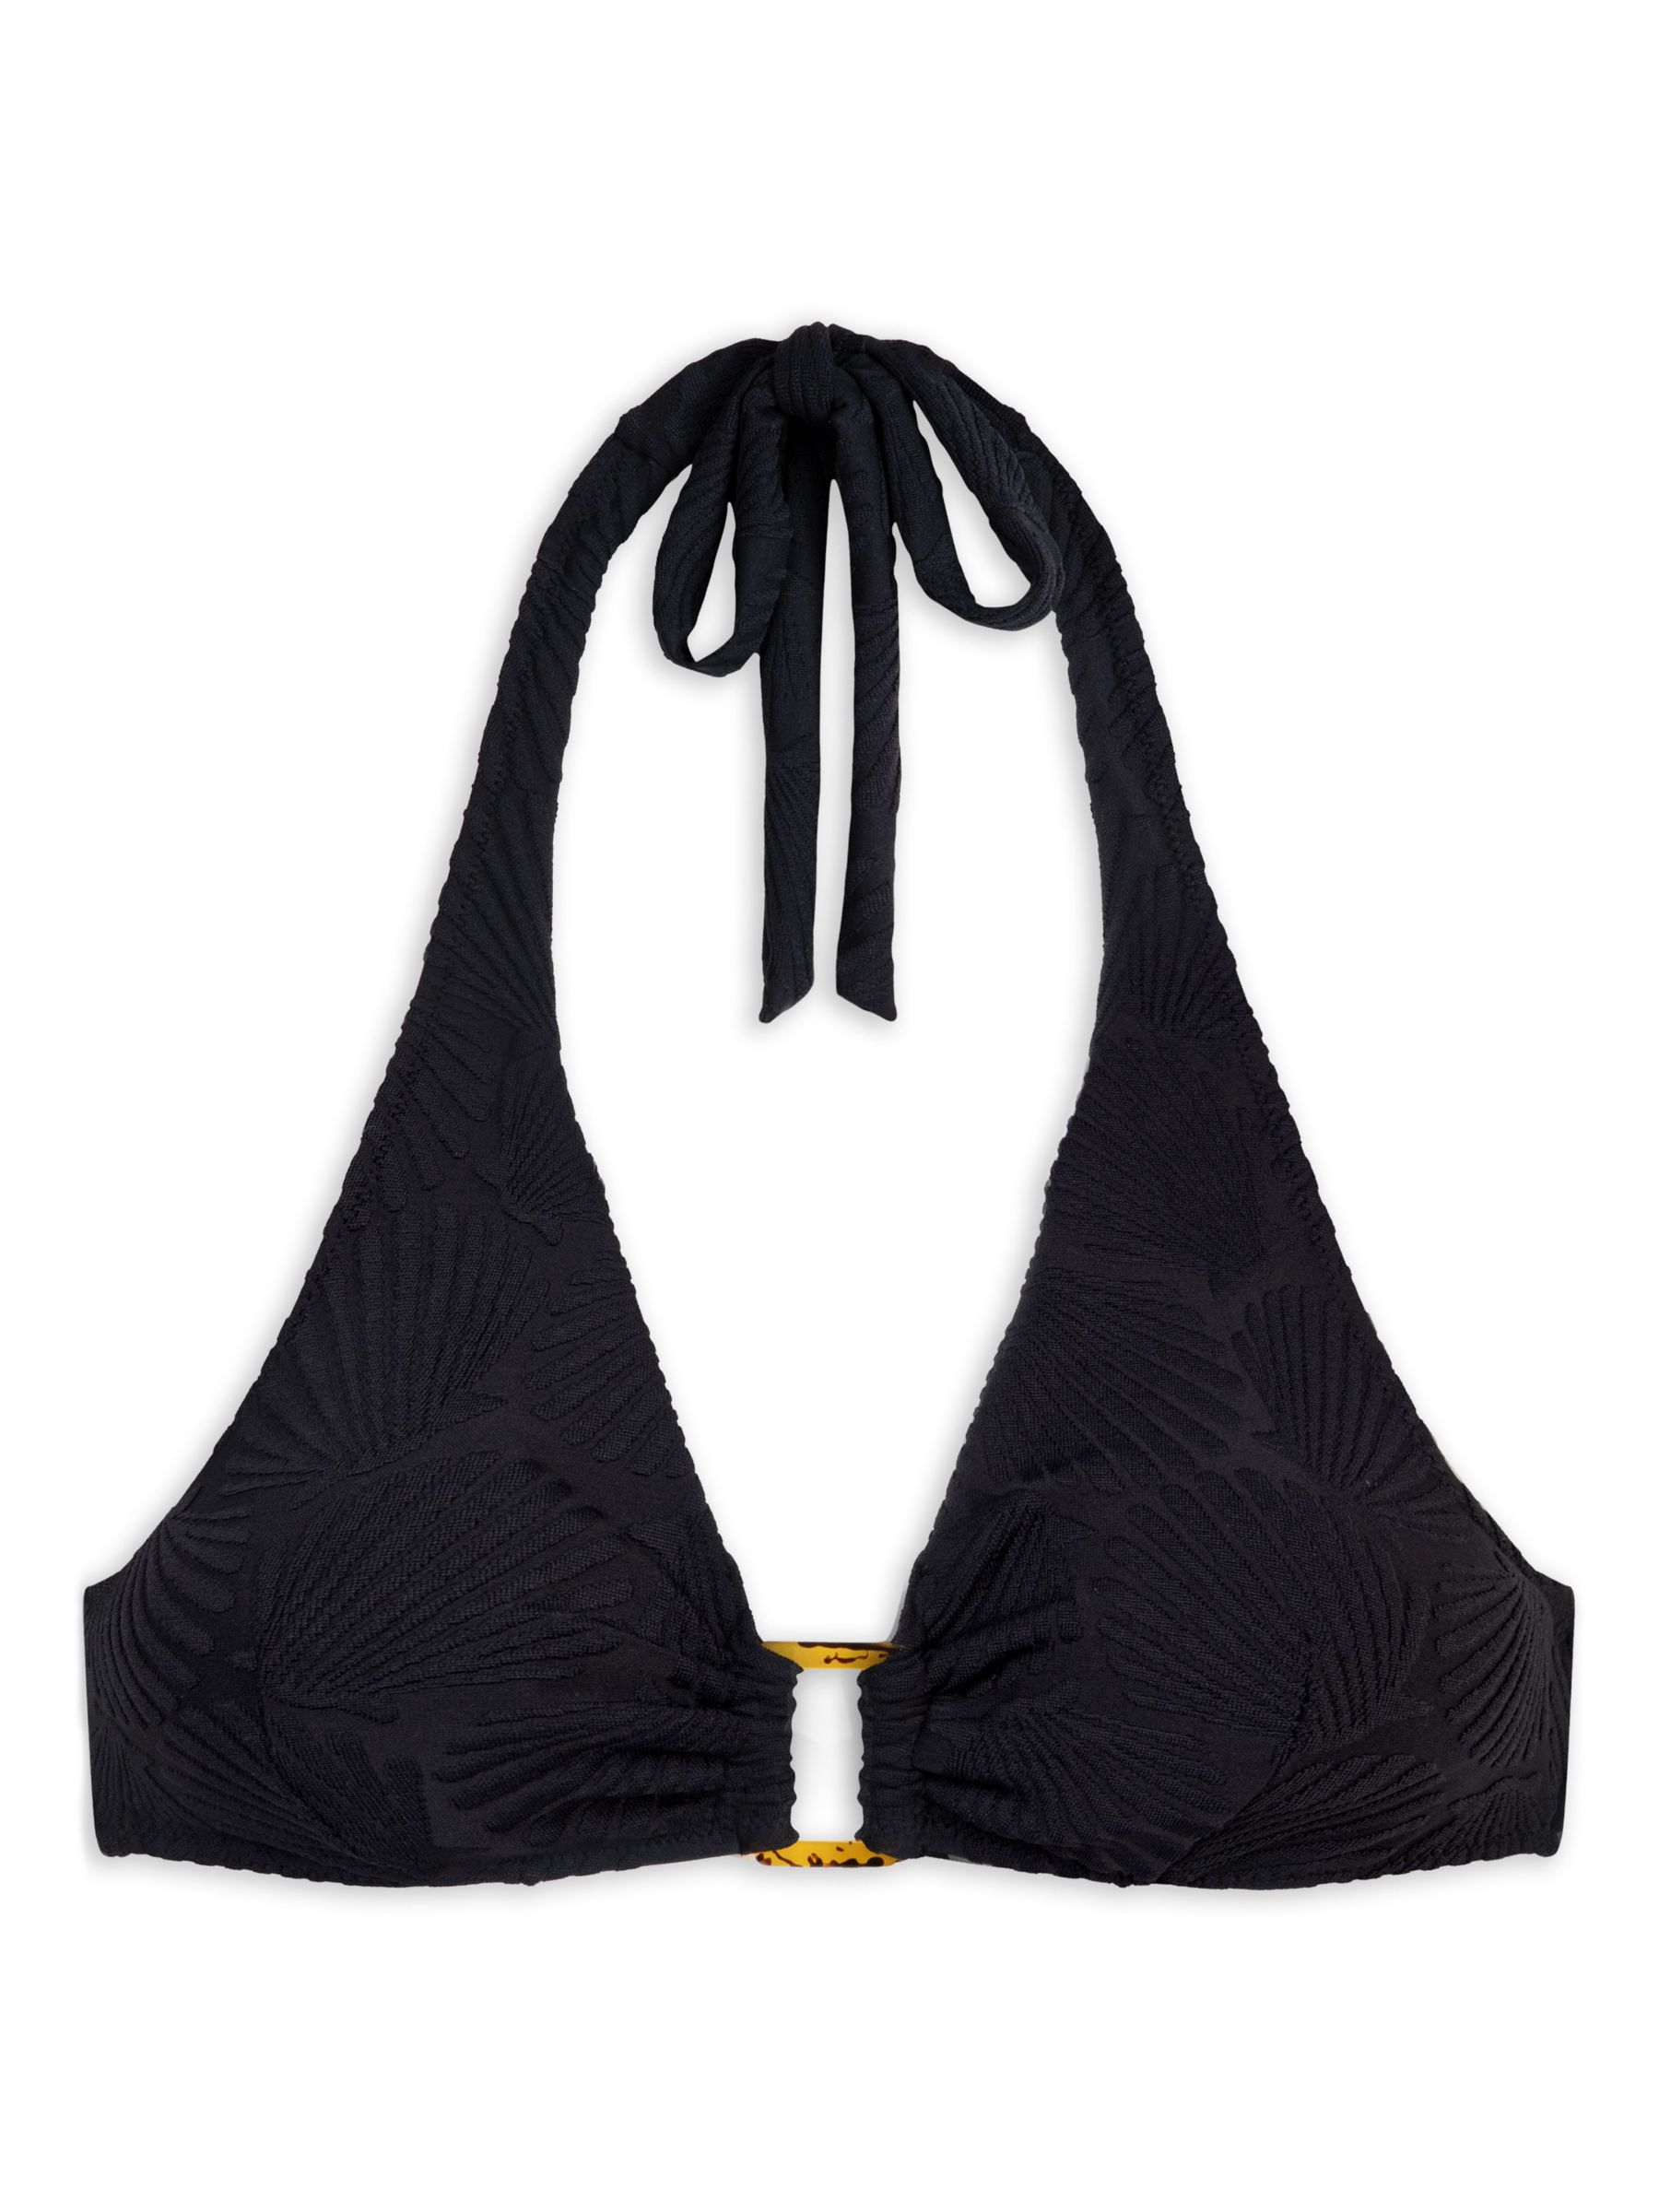 Chelsea Peers Jacquard Shell Halterneck Bikini Top, Black, 6